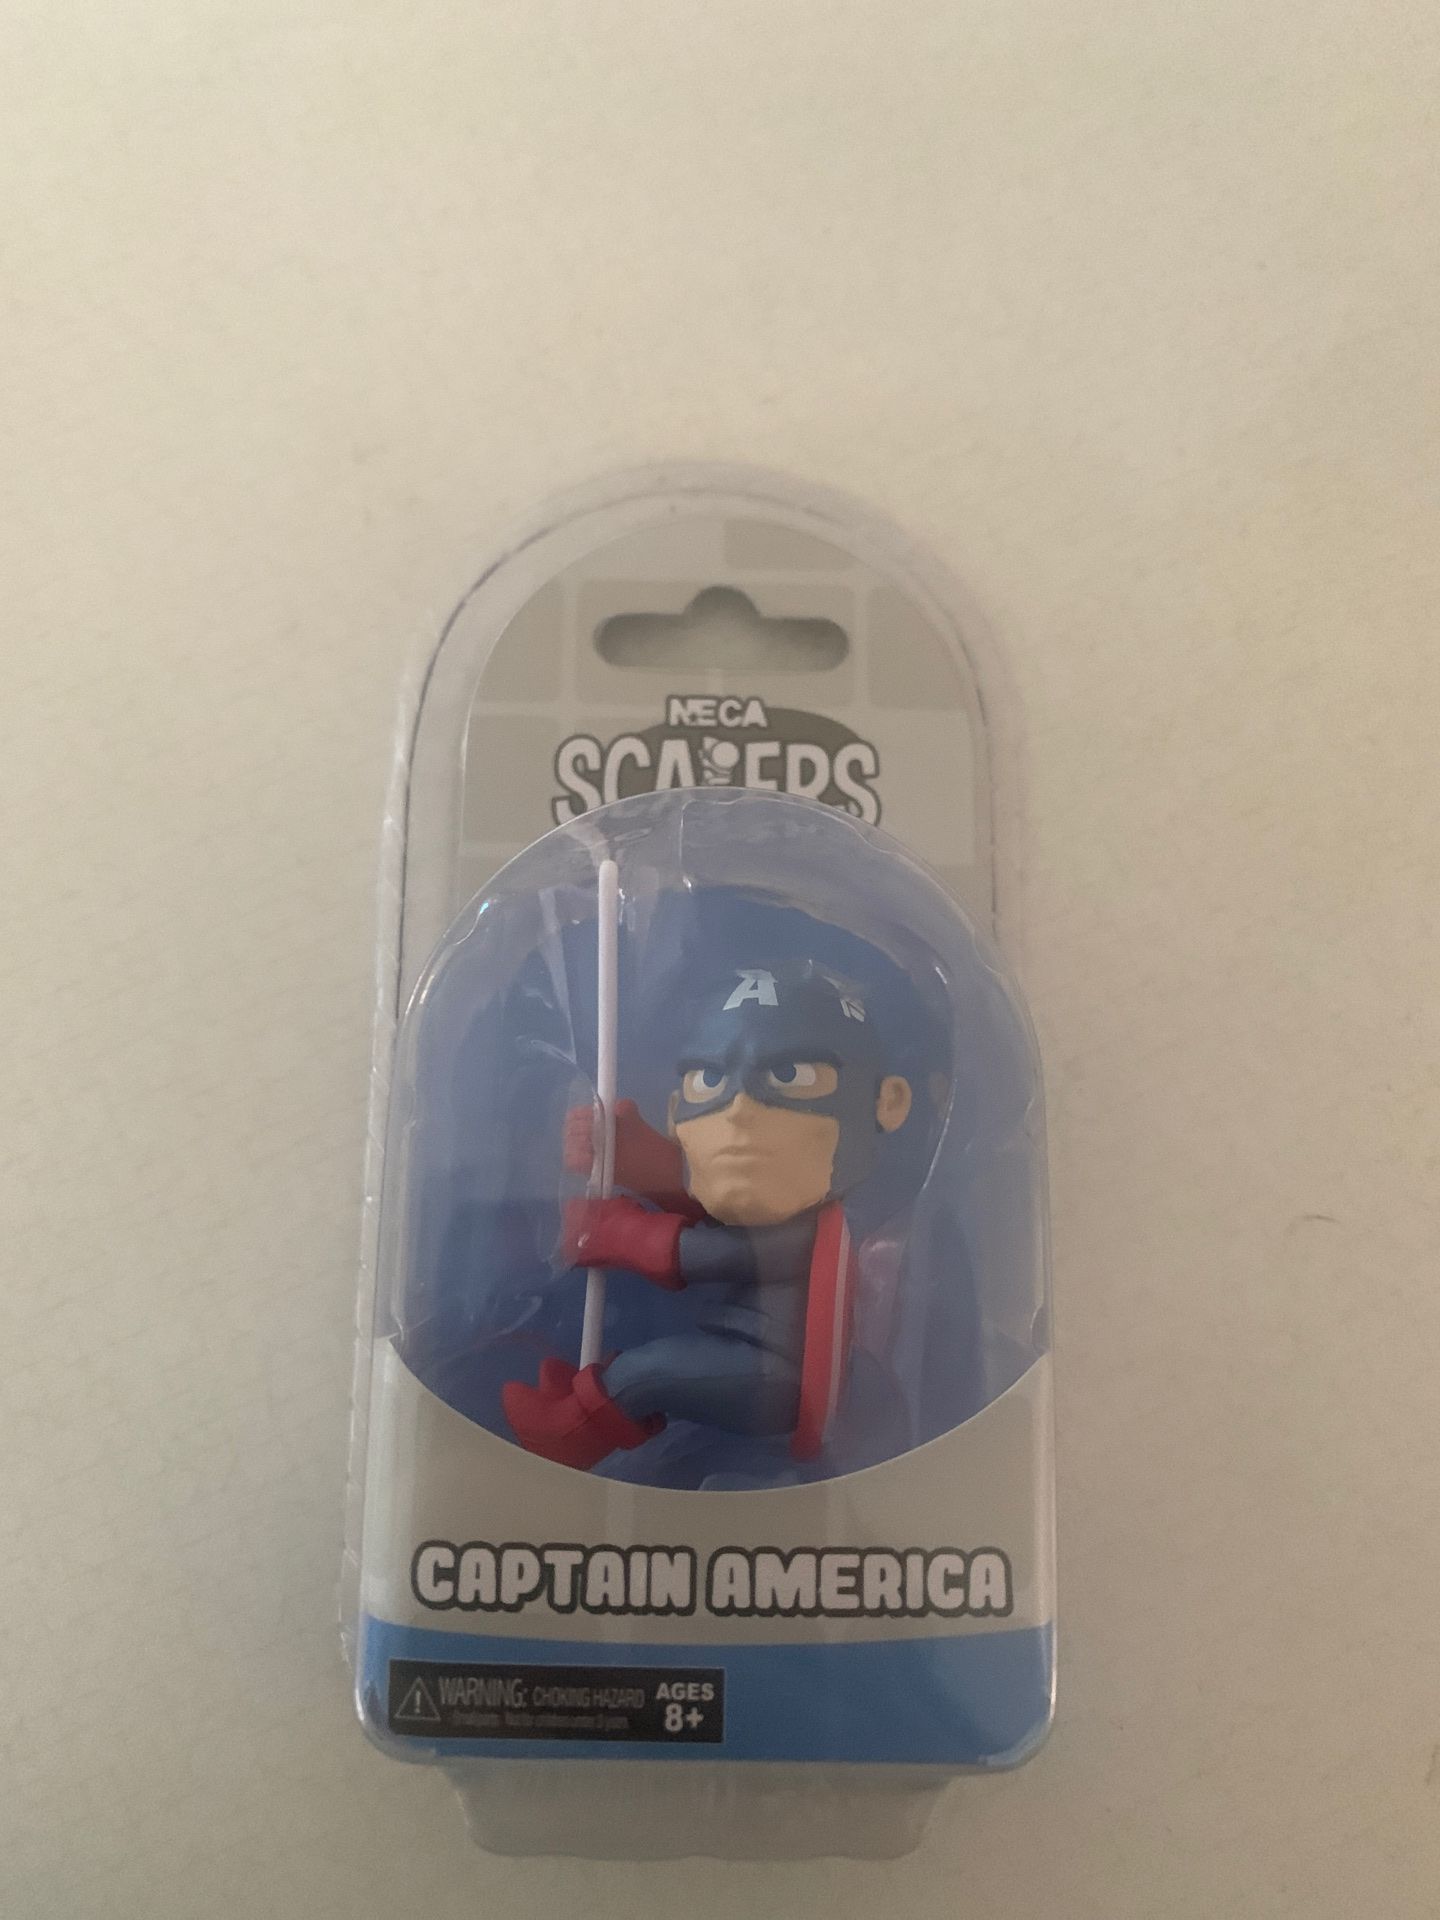 Captain America be a scaler